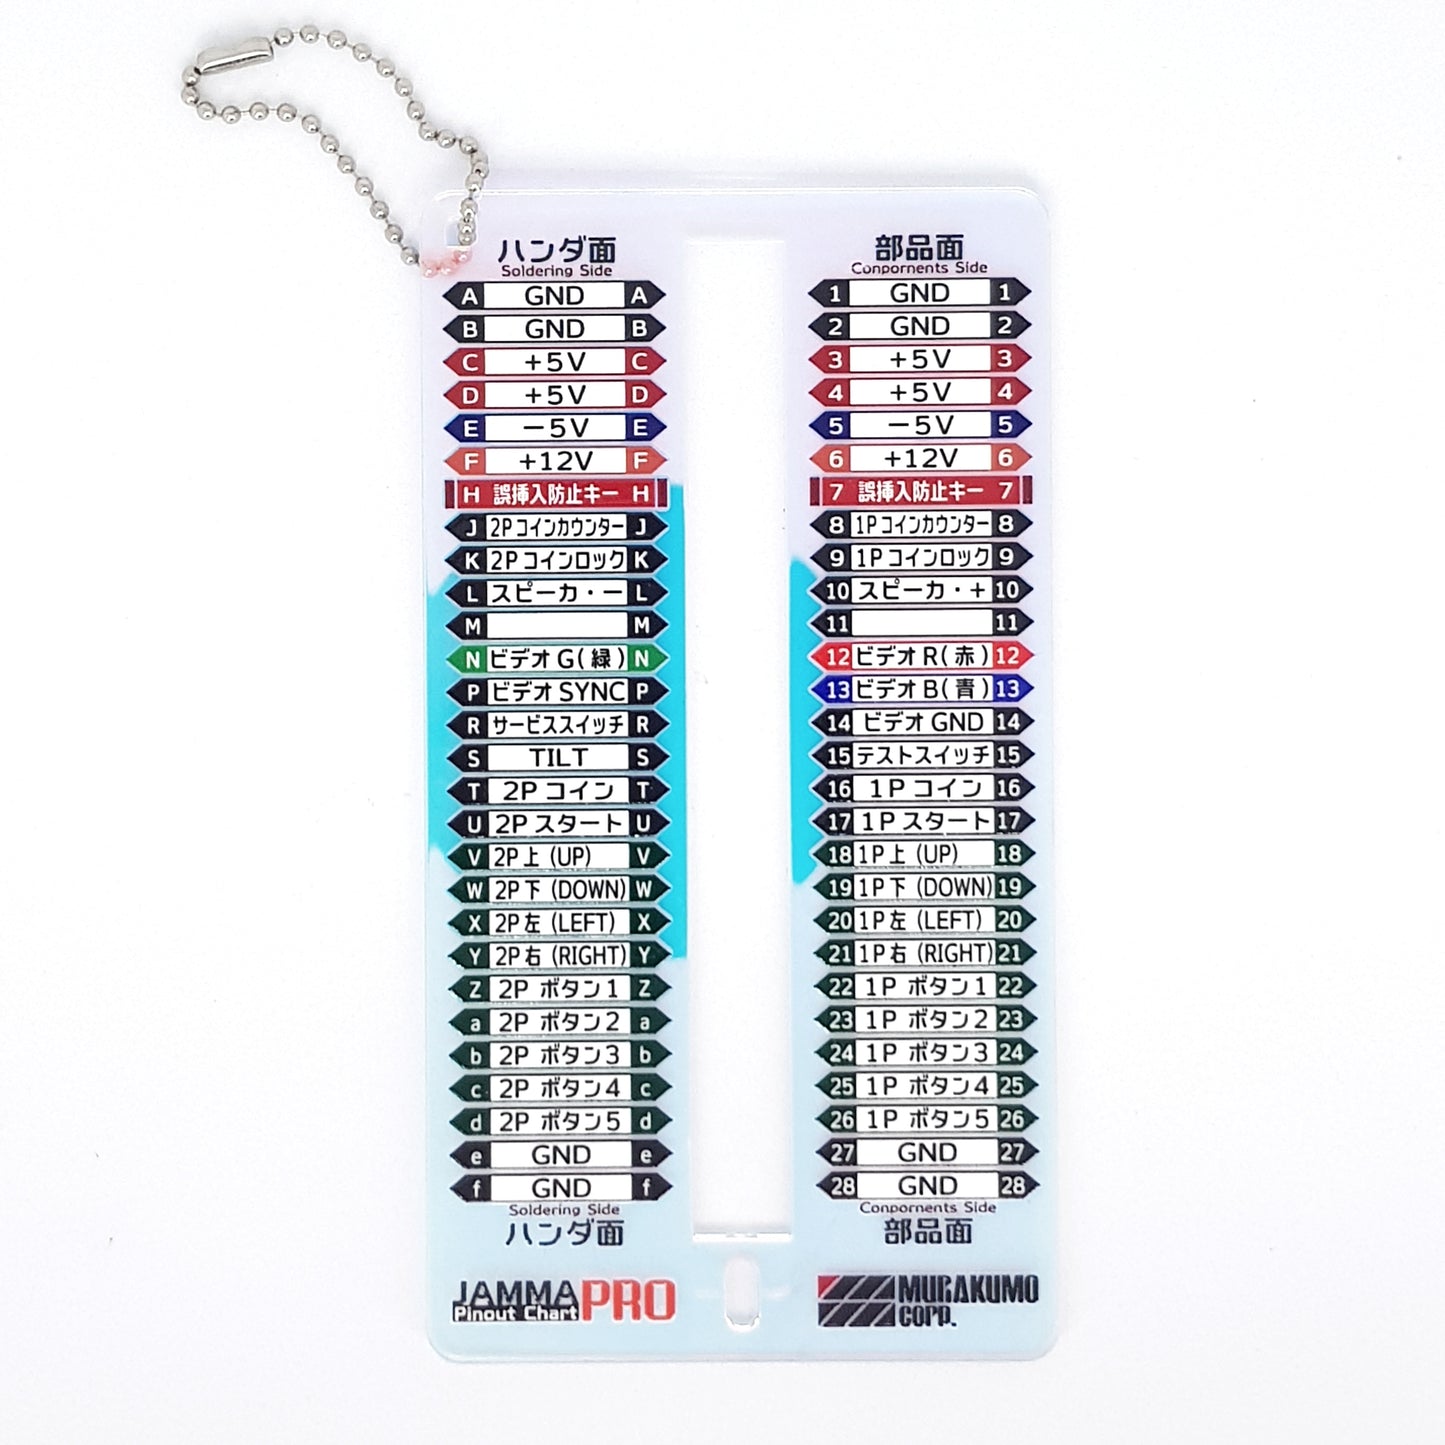 Murakumo Arts JAMMA Harness wiring table/keychain (Japanese) [PRO Aurora Limited Edition]